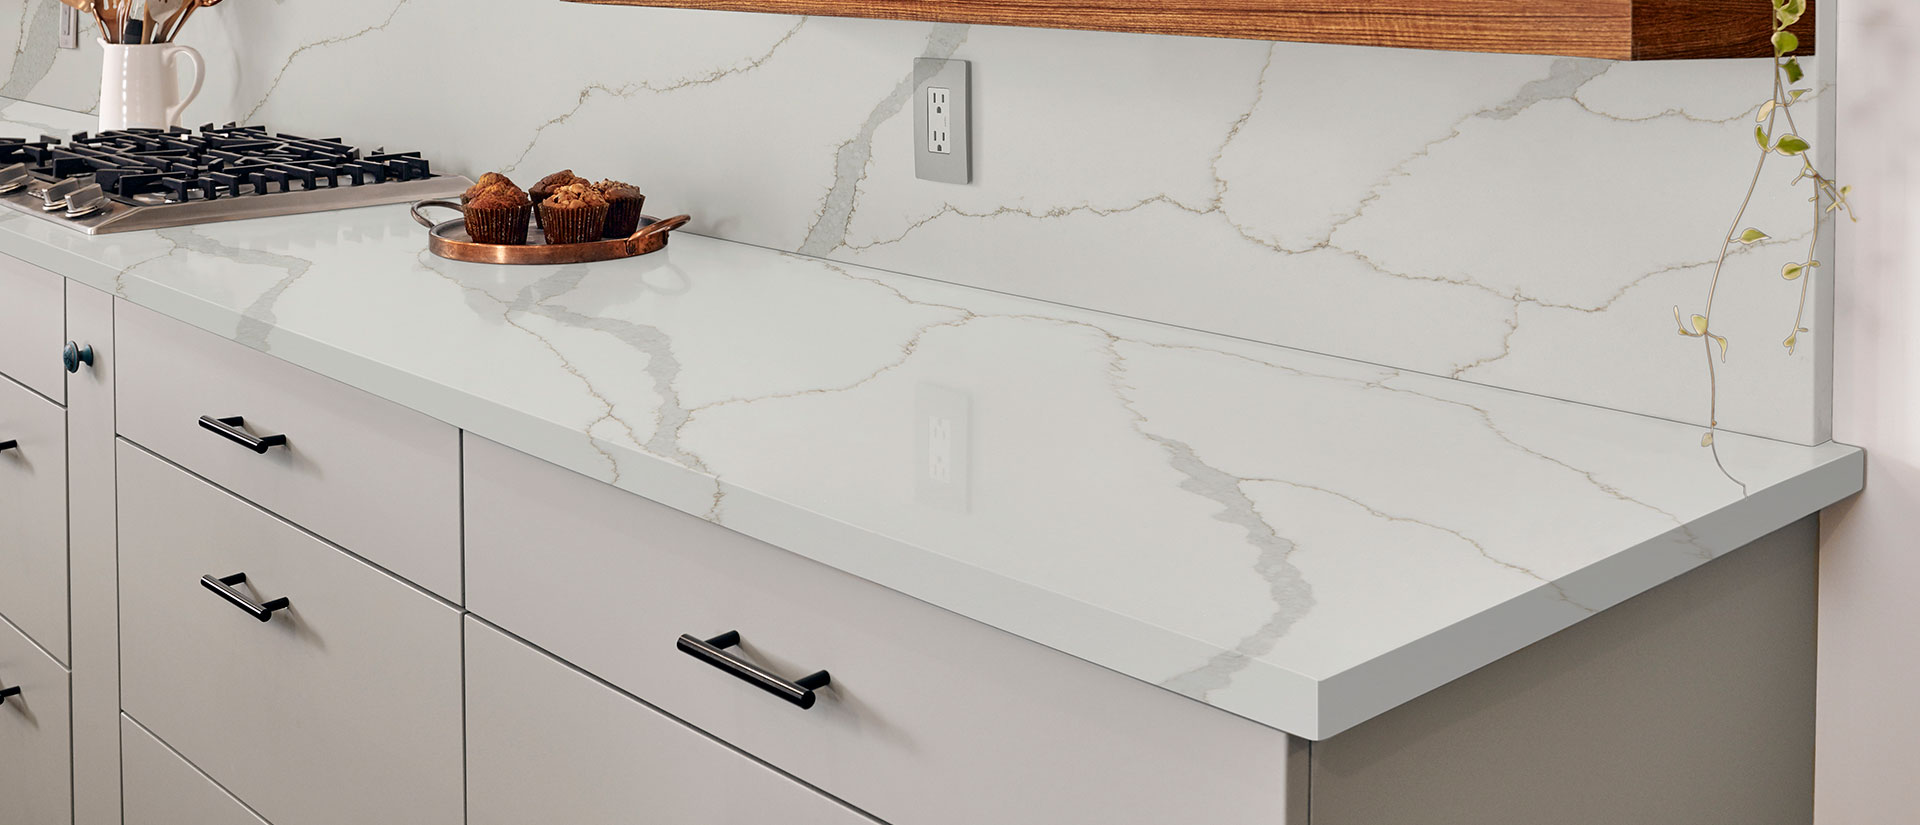 Calacatta Idillio quartz countertop in a spacious kitchen with wooden floors